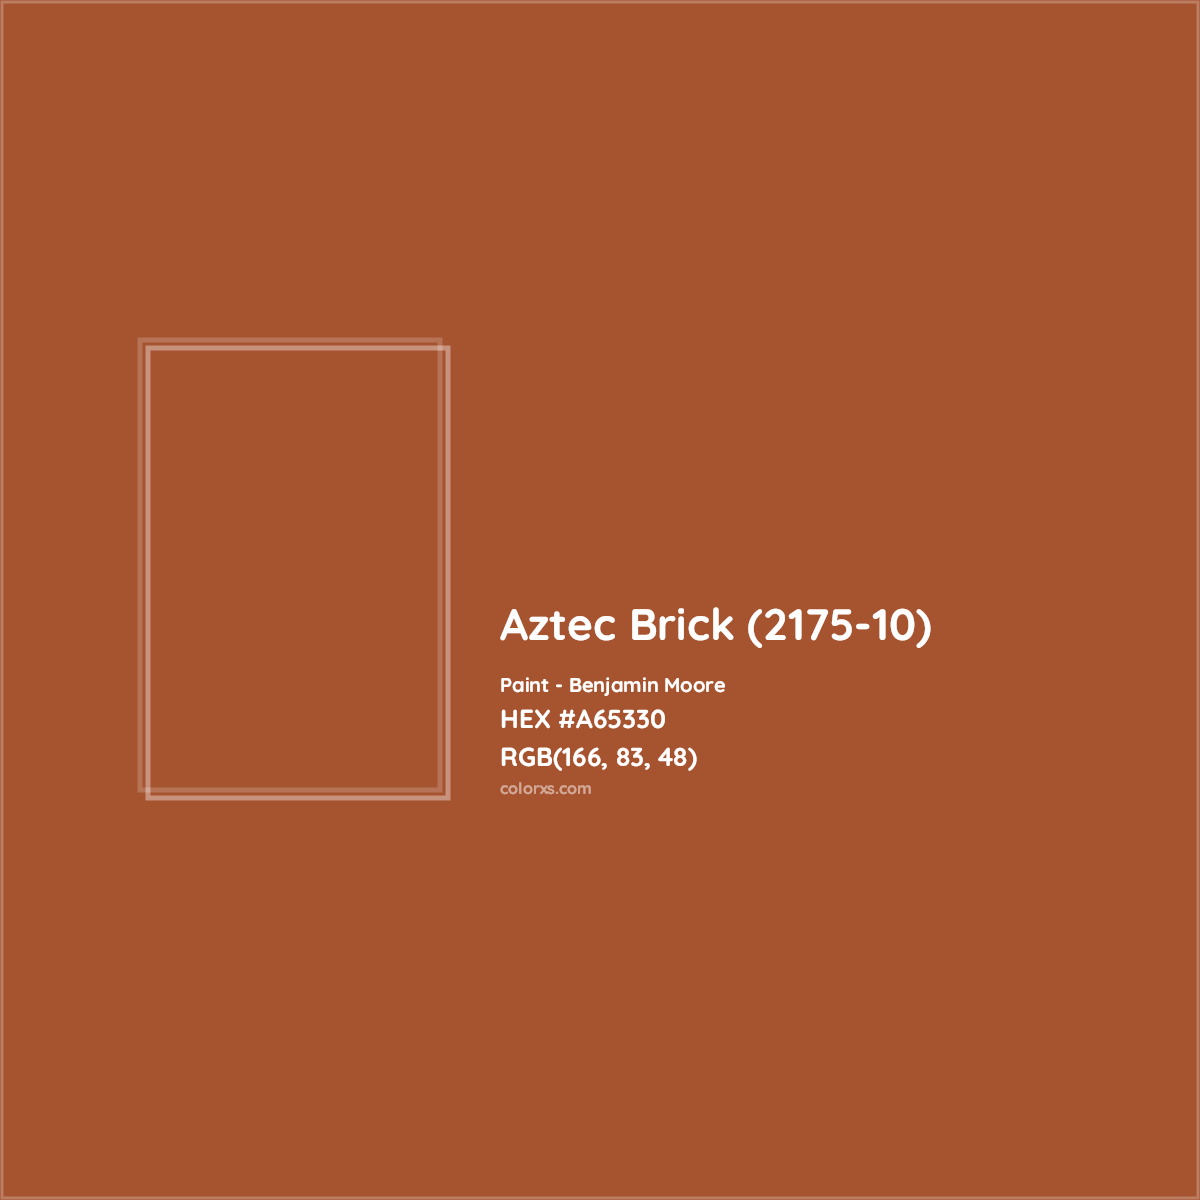 Aztec Brick Paint Sample by Benjamin Moore (2175-10)